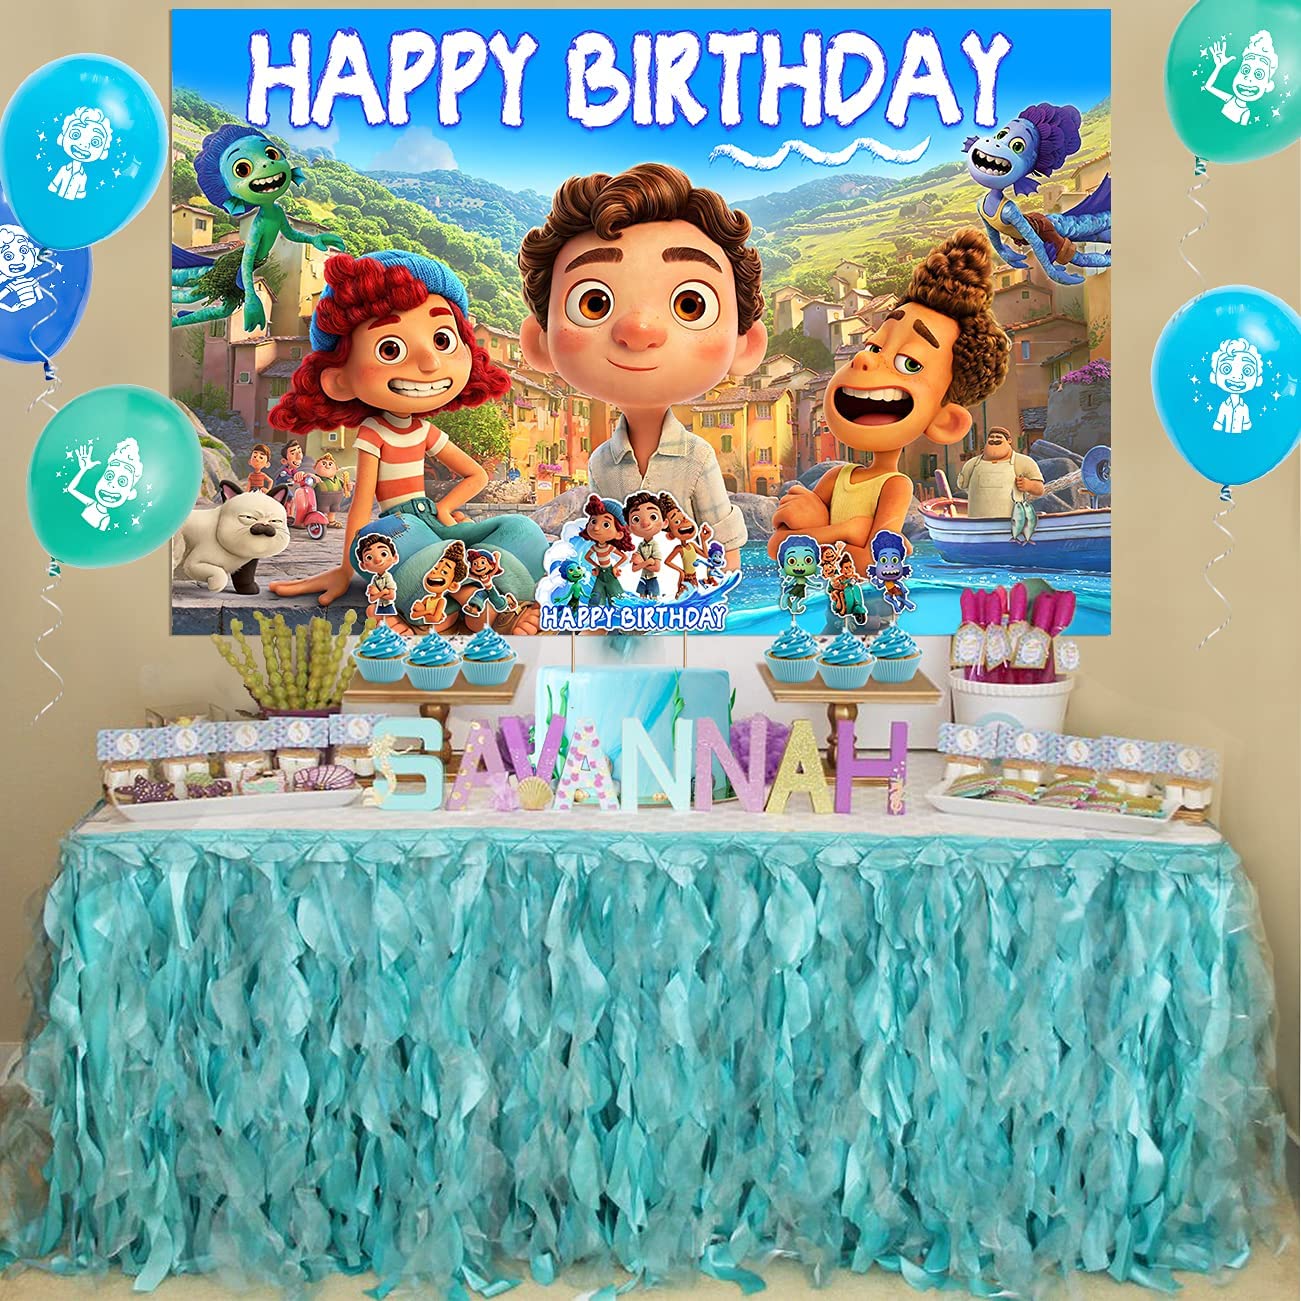 Abecedario Bluey  Kids themed birthday parties, 3rd birthday parties, Kids  birthday